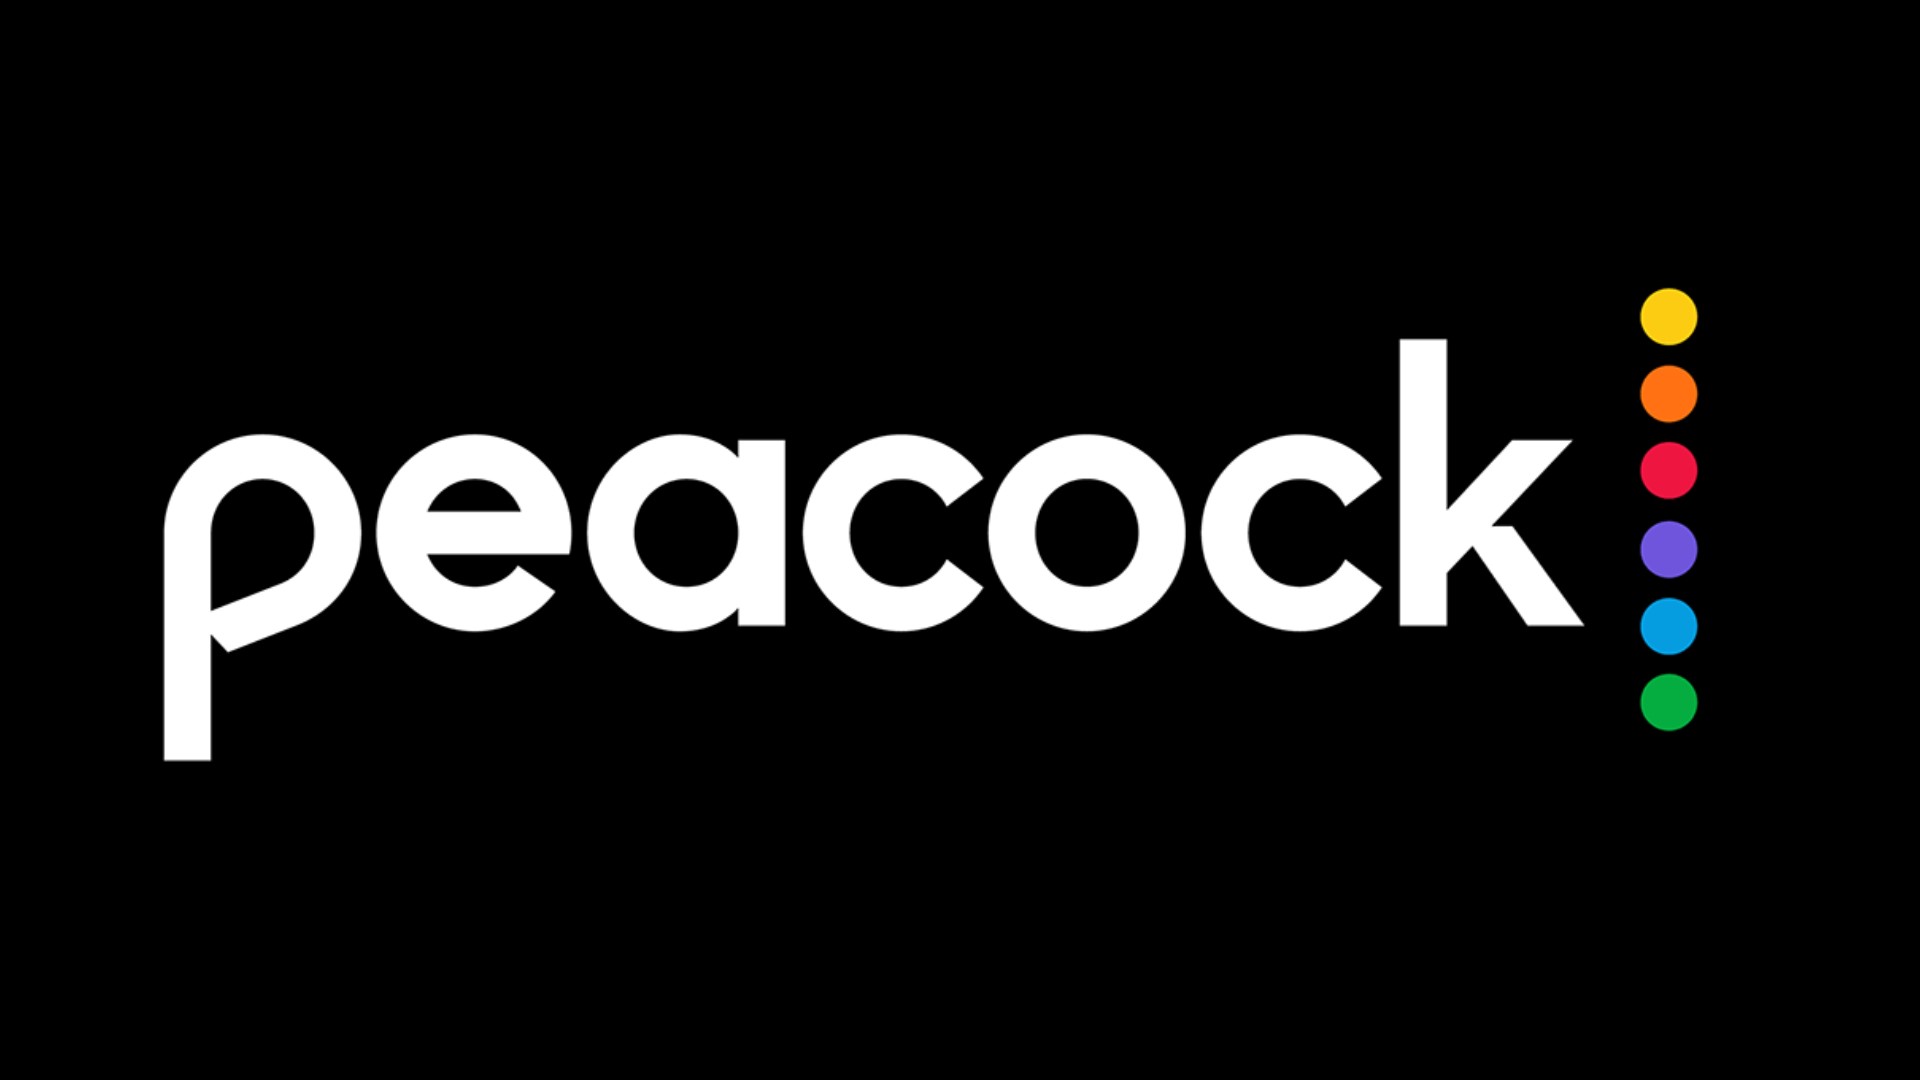 Peacock logo big